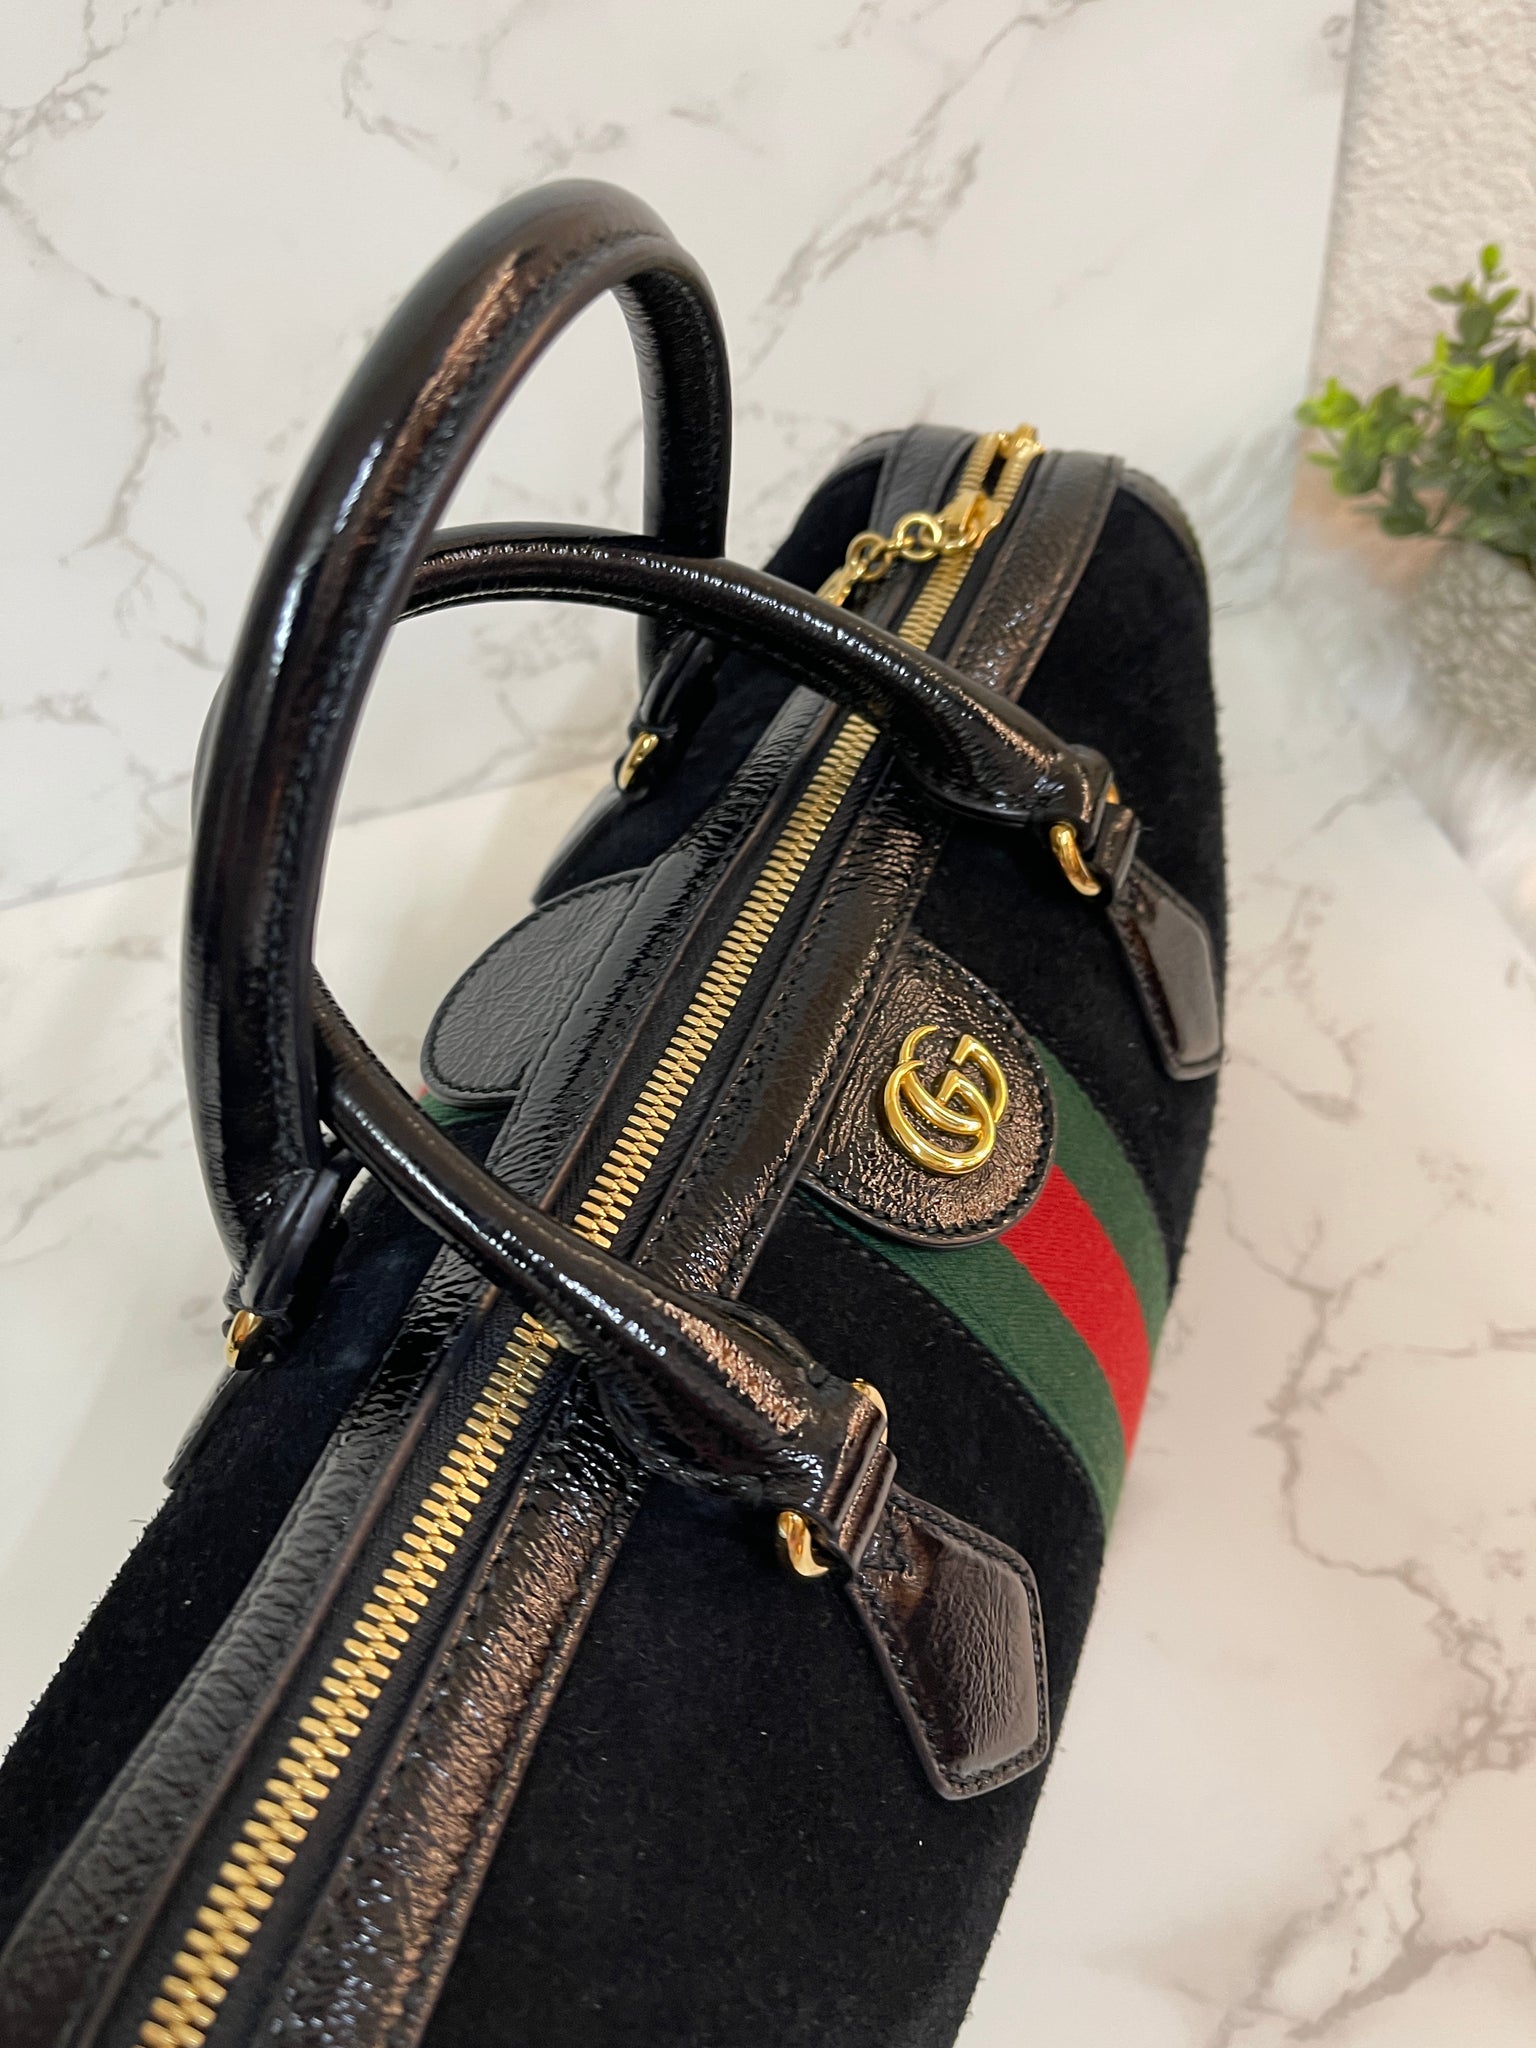 Gucci Ophidia Medium Suede Top Handle Boston Bag